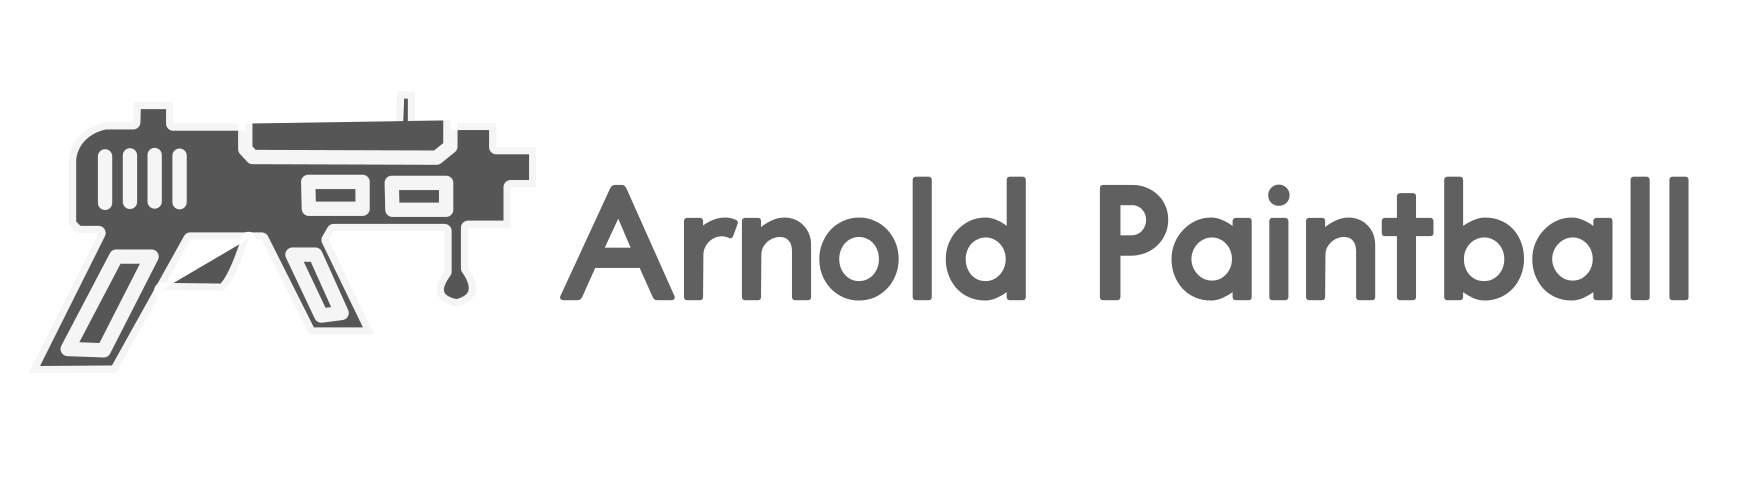 Arnold Paintball